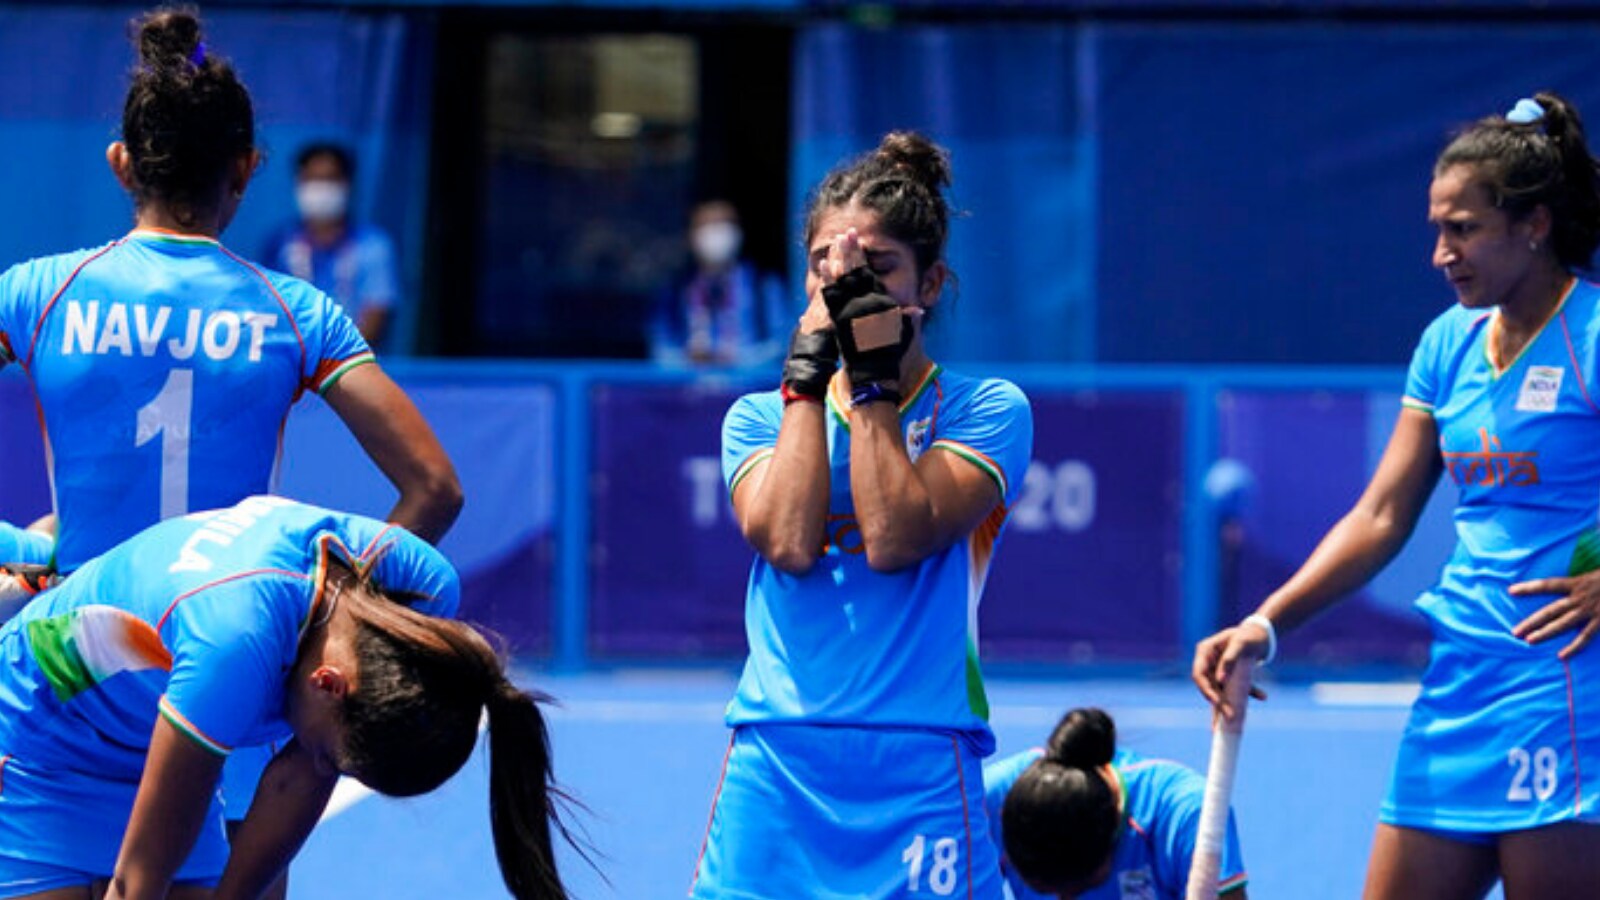 Ini Bukan Kekalahan Tapi Kemenangan!  Media Sosial Memuji Tim Hoki Wanita India Meski Kalah di Olimpiade Perunggu Play-off 3-4 dari Inggris Raya